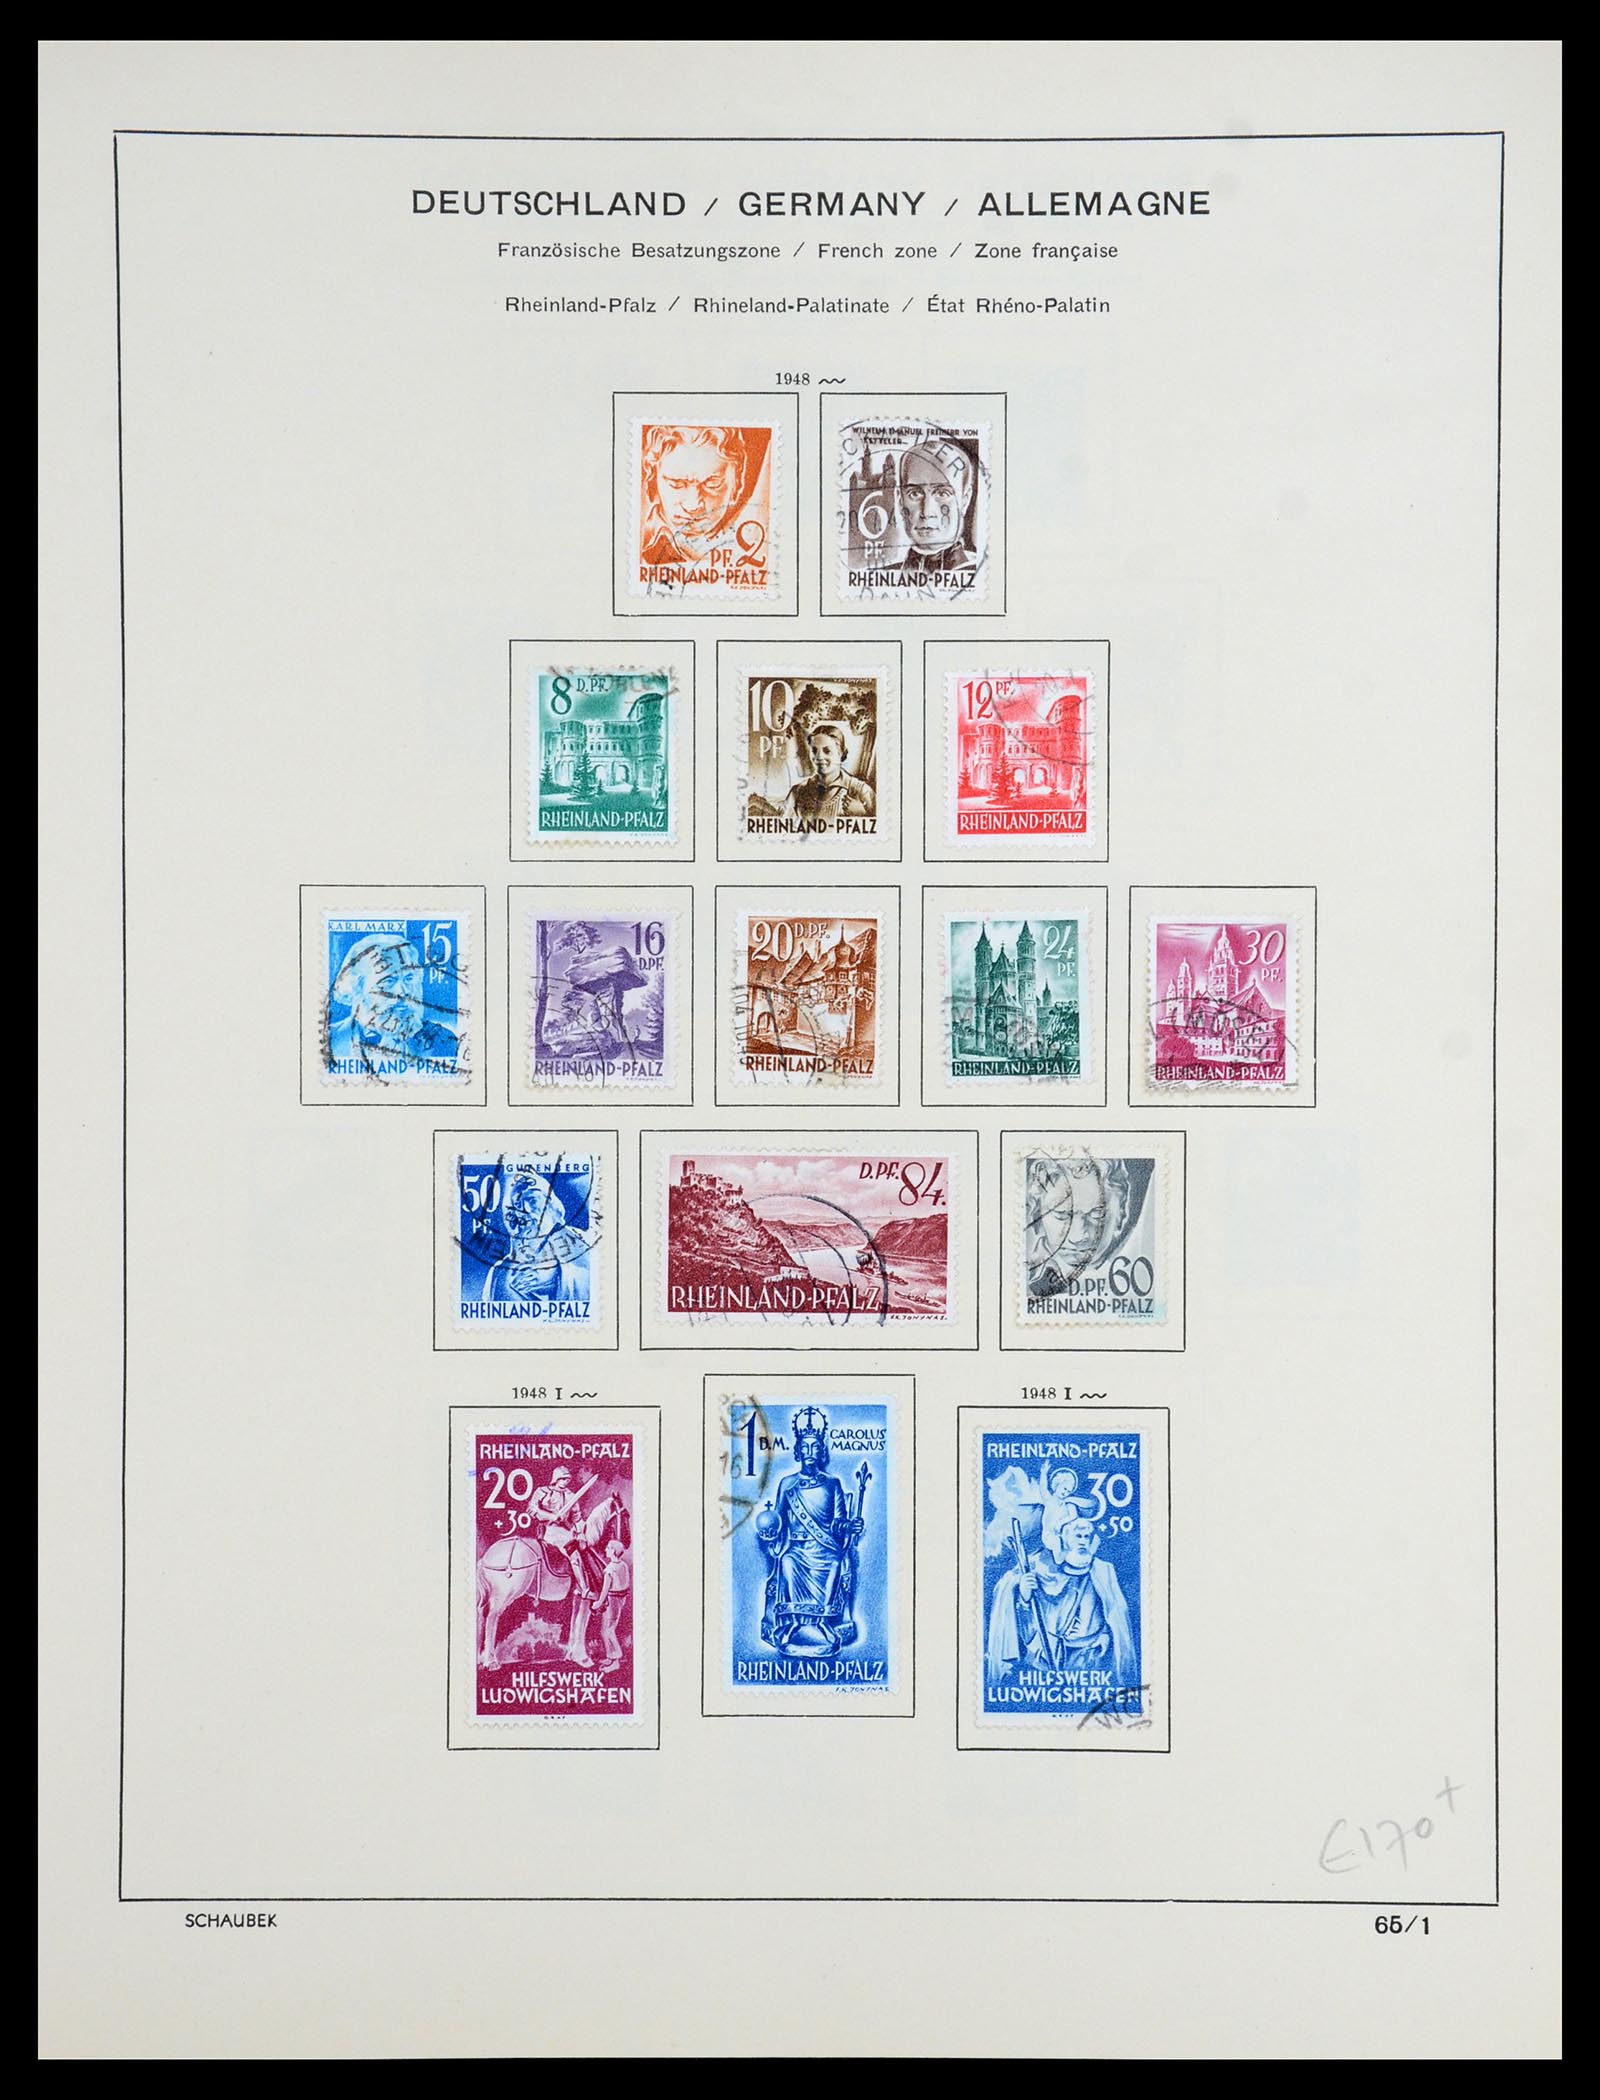 35962 021 - Stamp collection 35962 German Zones 1945-1949.